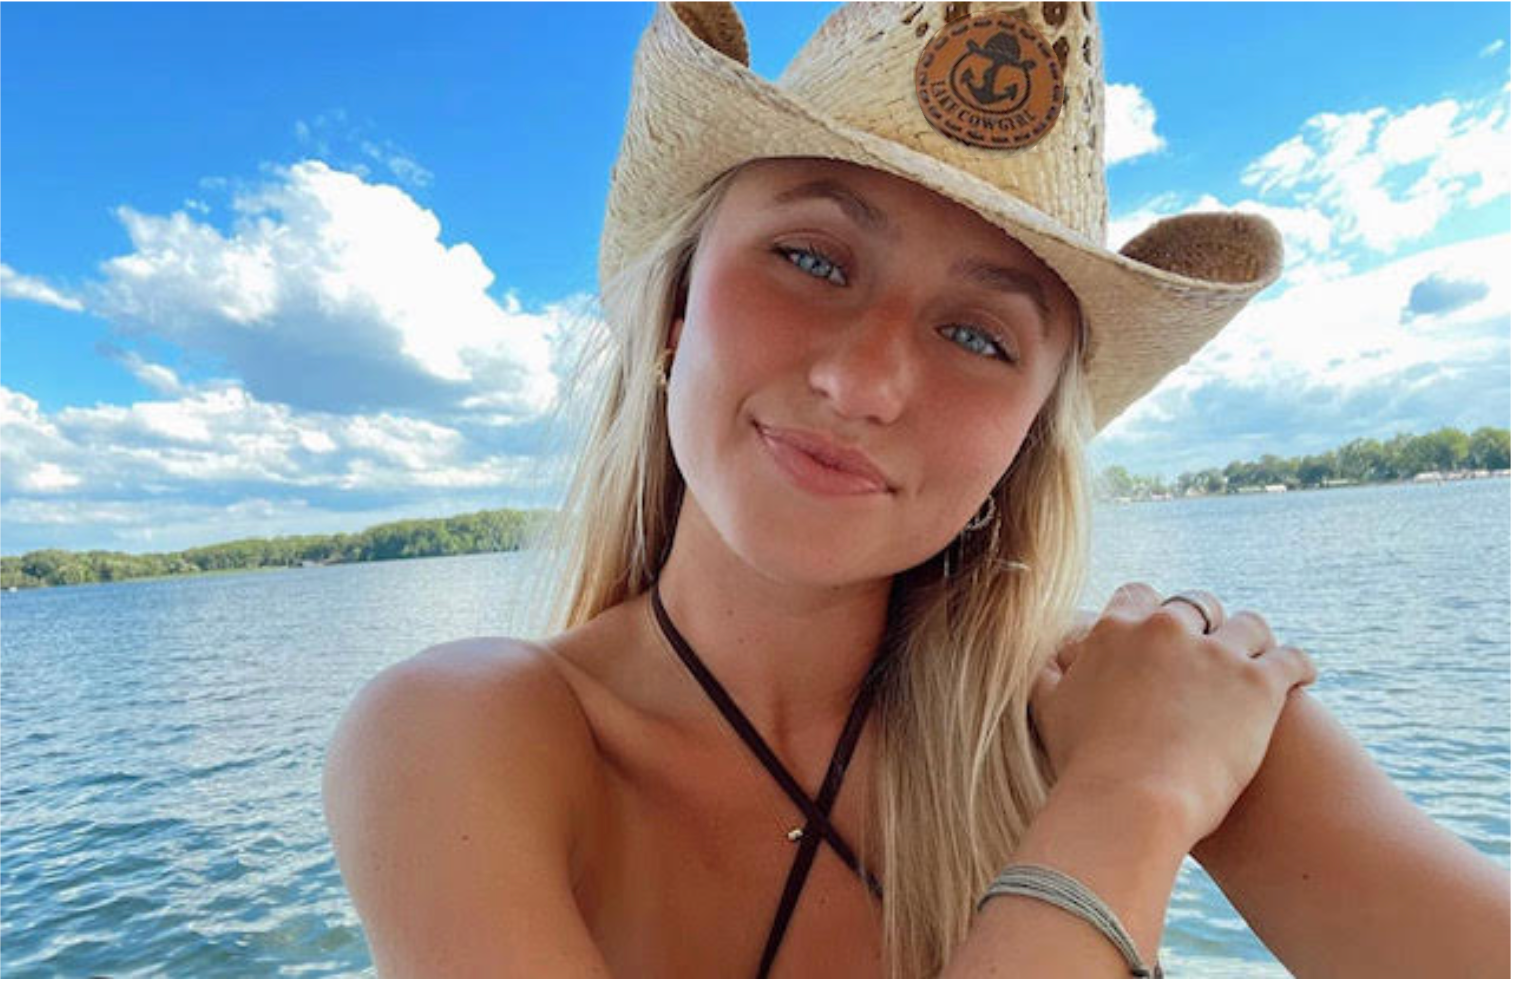 Photo of Photo of Lake Cowboy Instagram Model Chloe wearing a Lake Cowgirl Signature Cowboy Hat on Lake Minnetonka